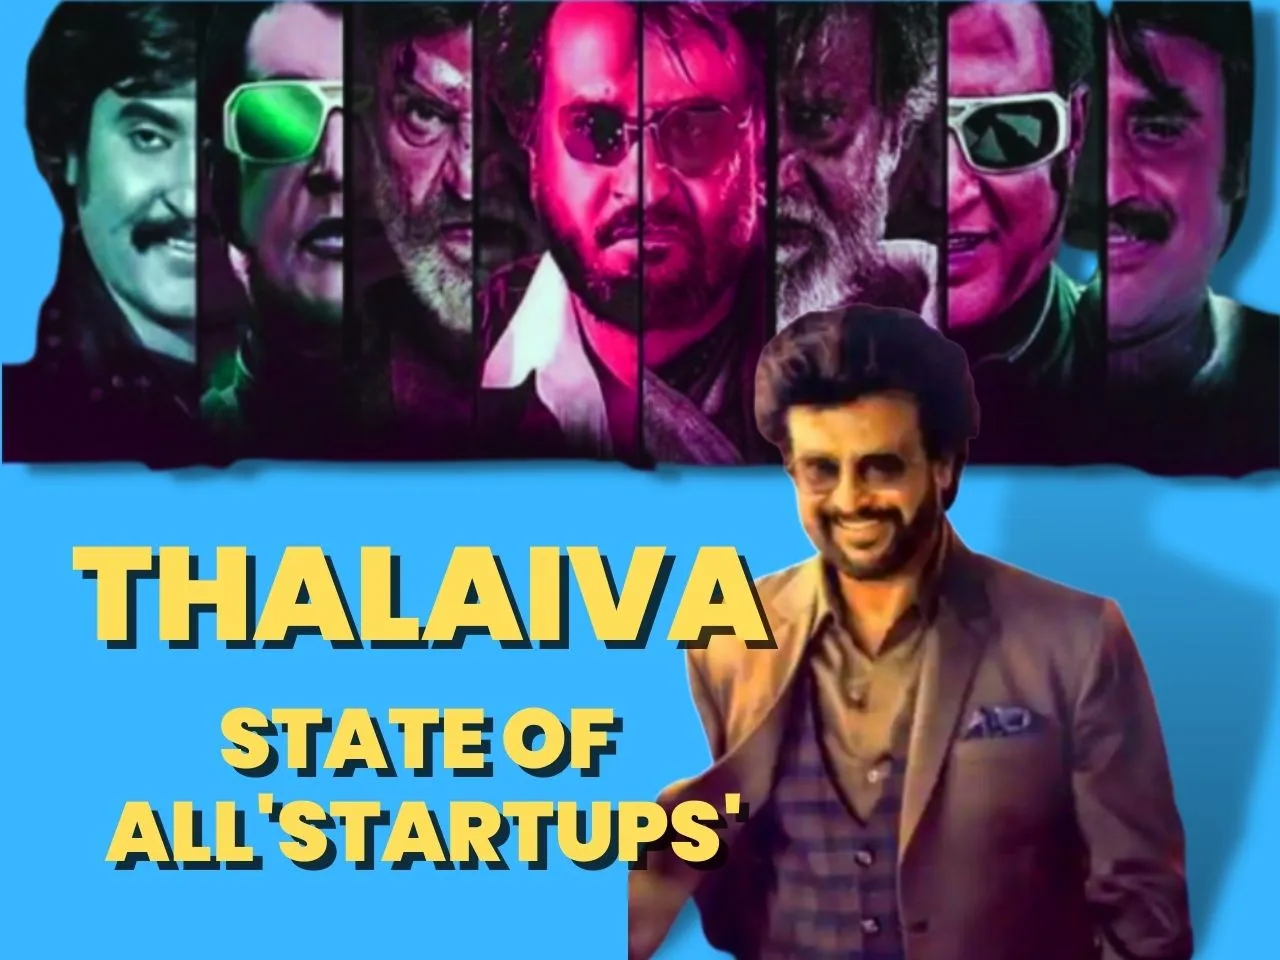 Tamil Nadu entrepreneurs shaping the startup economy